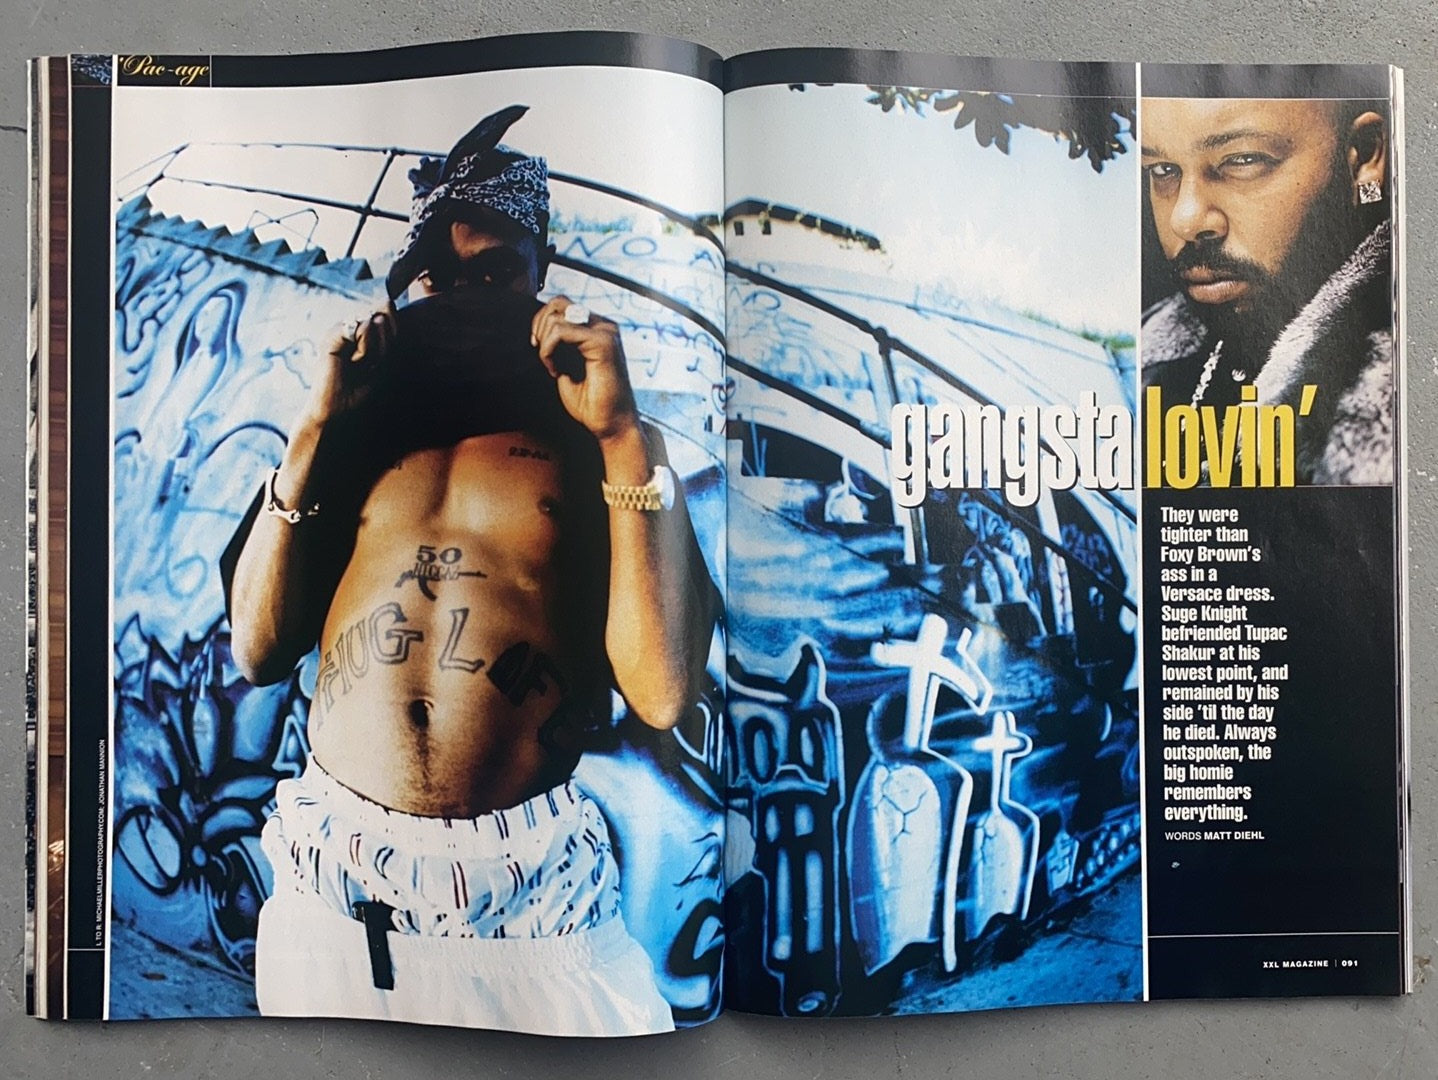 XXL Magazine October 2002 2Pac - MoSneaks Shop Online